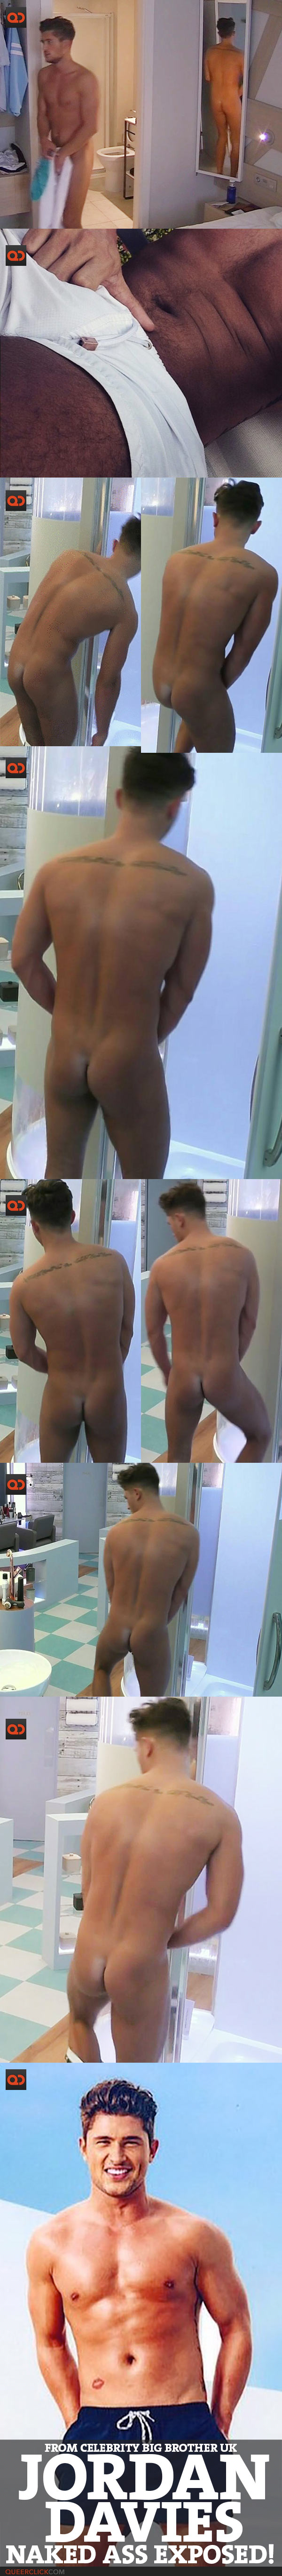 Jordan Davies, From Celebrity Big Brother UK, Naked Ass Exposed!